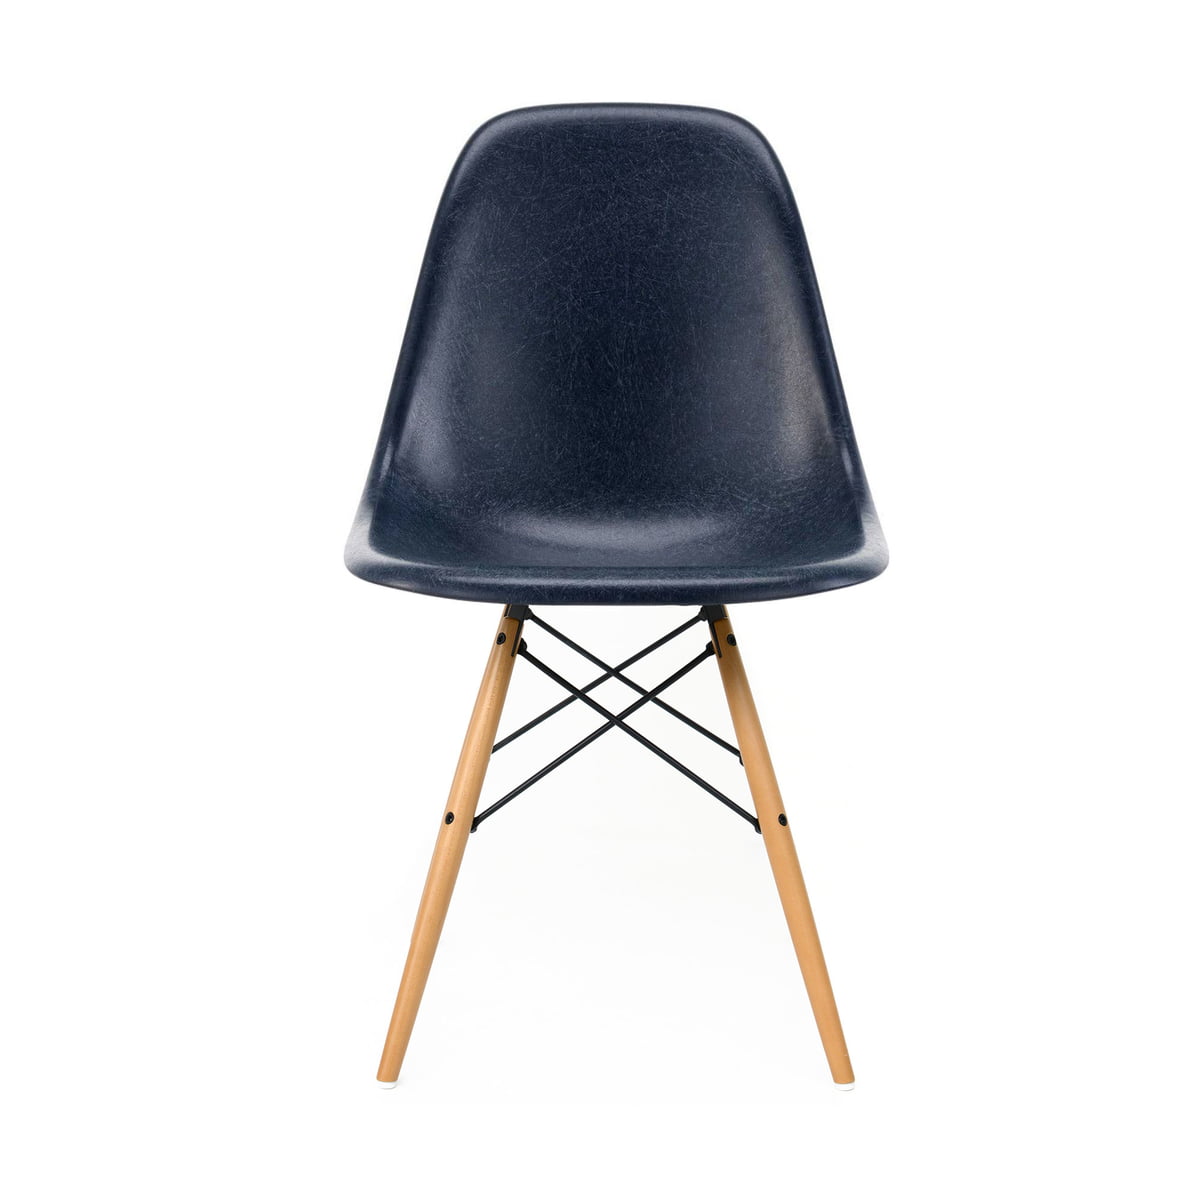 Vitra Eames DSW stoelen | Design stoel kopen | Flinders